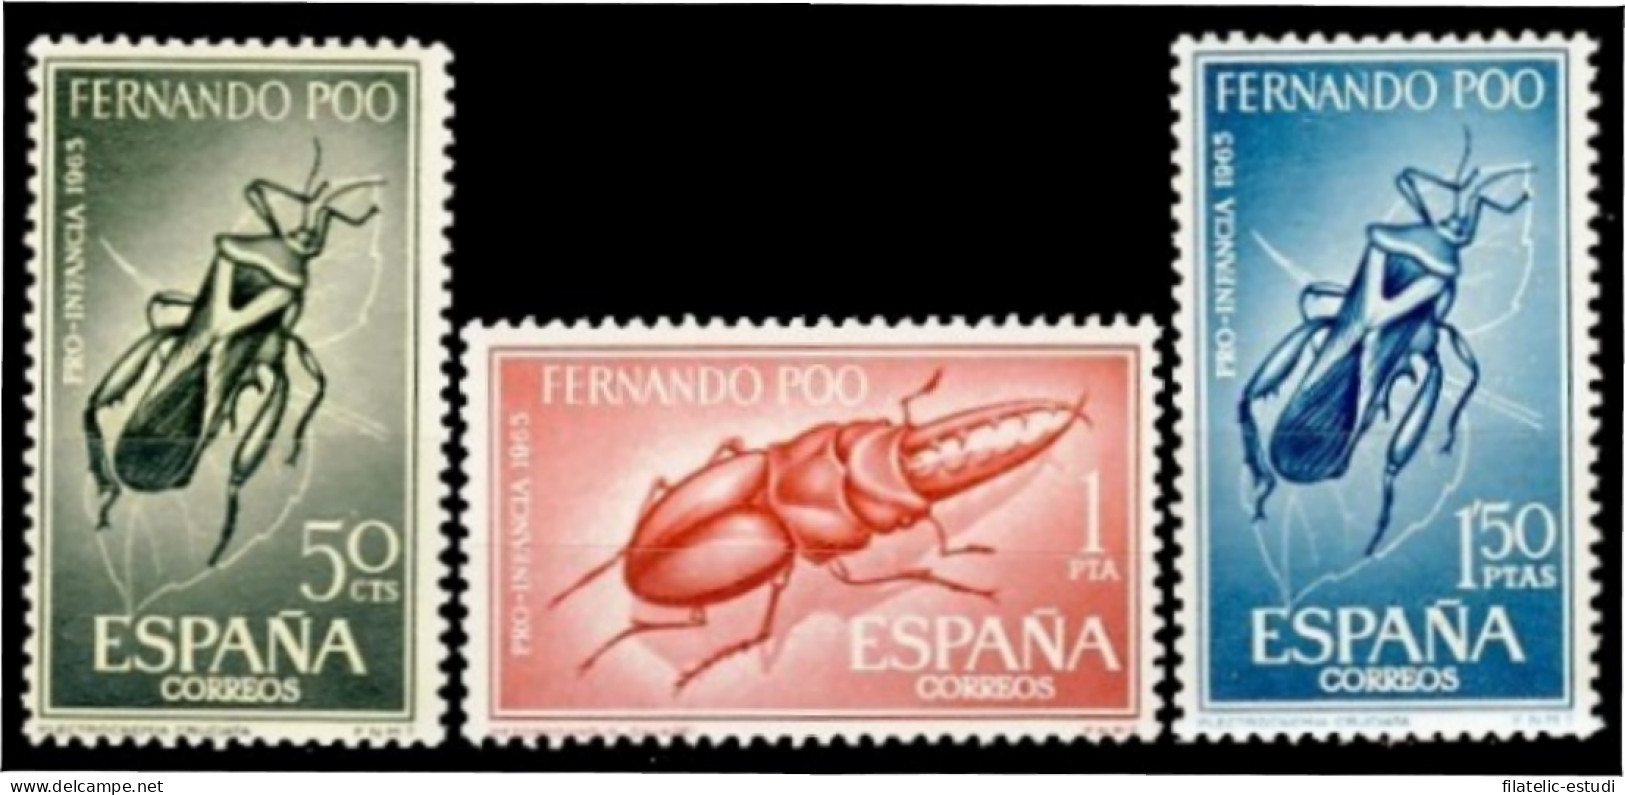 Fernando Poo 242/44 1965 Pro Infancia Insectos MNH - Fernando Po